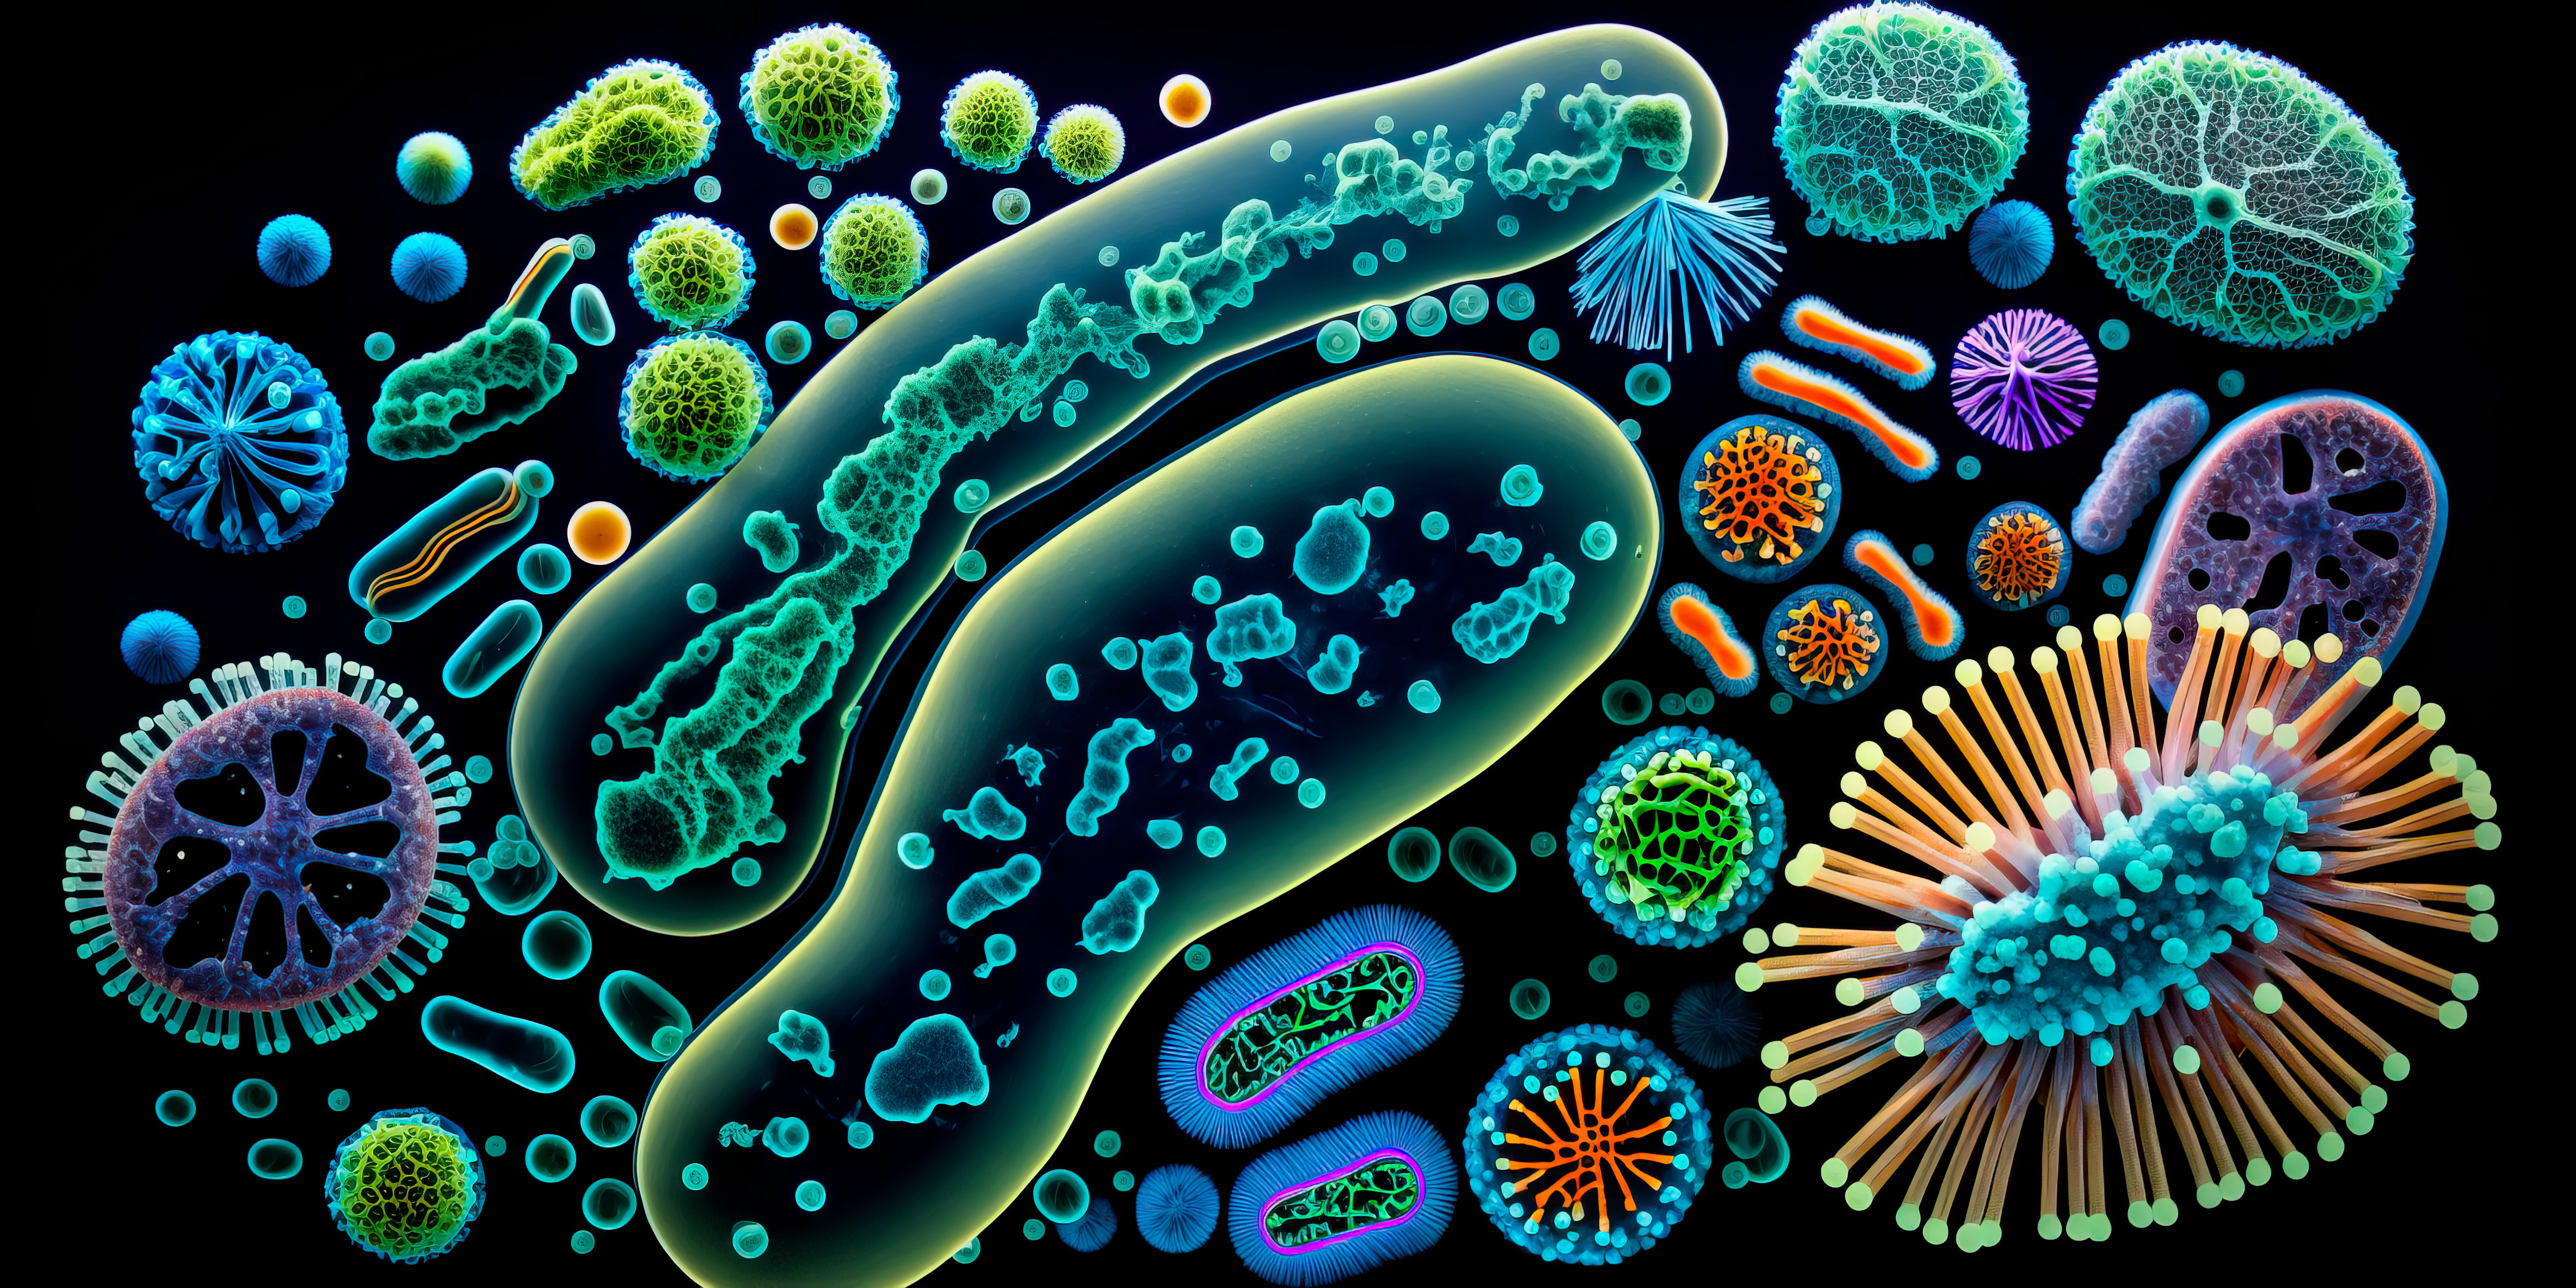 Close-up of superbugs through a microscope